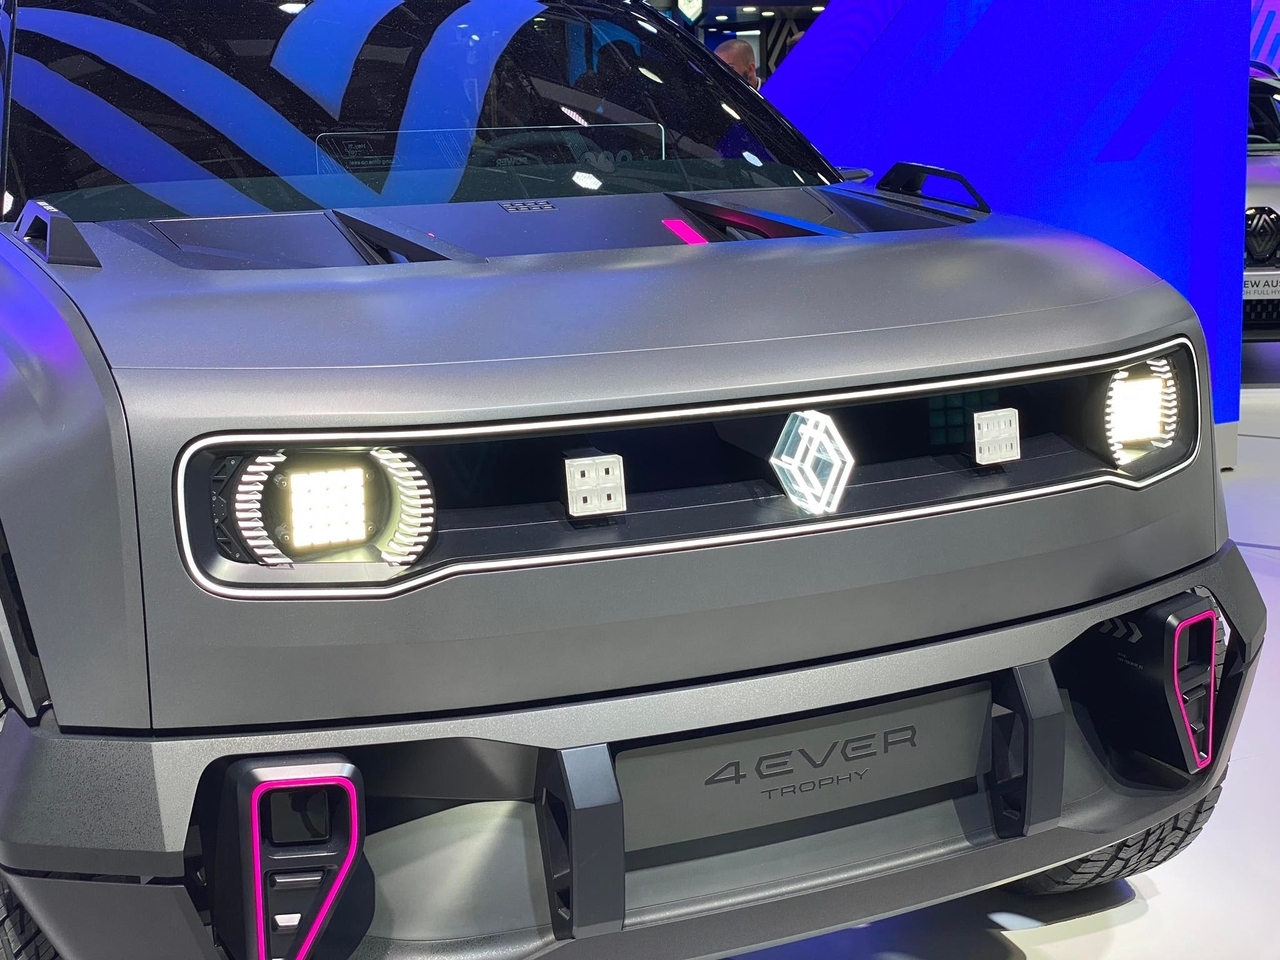 Renault 4Ever Trophy - Salone di Parigi 2022